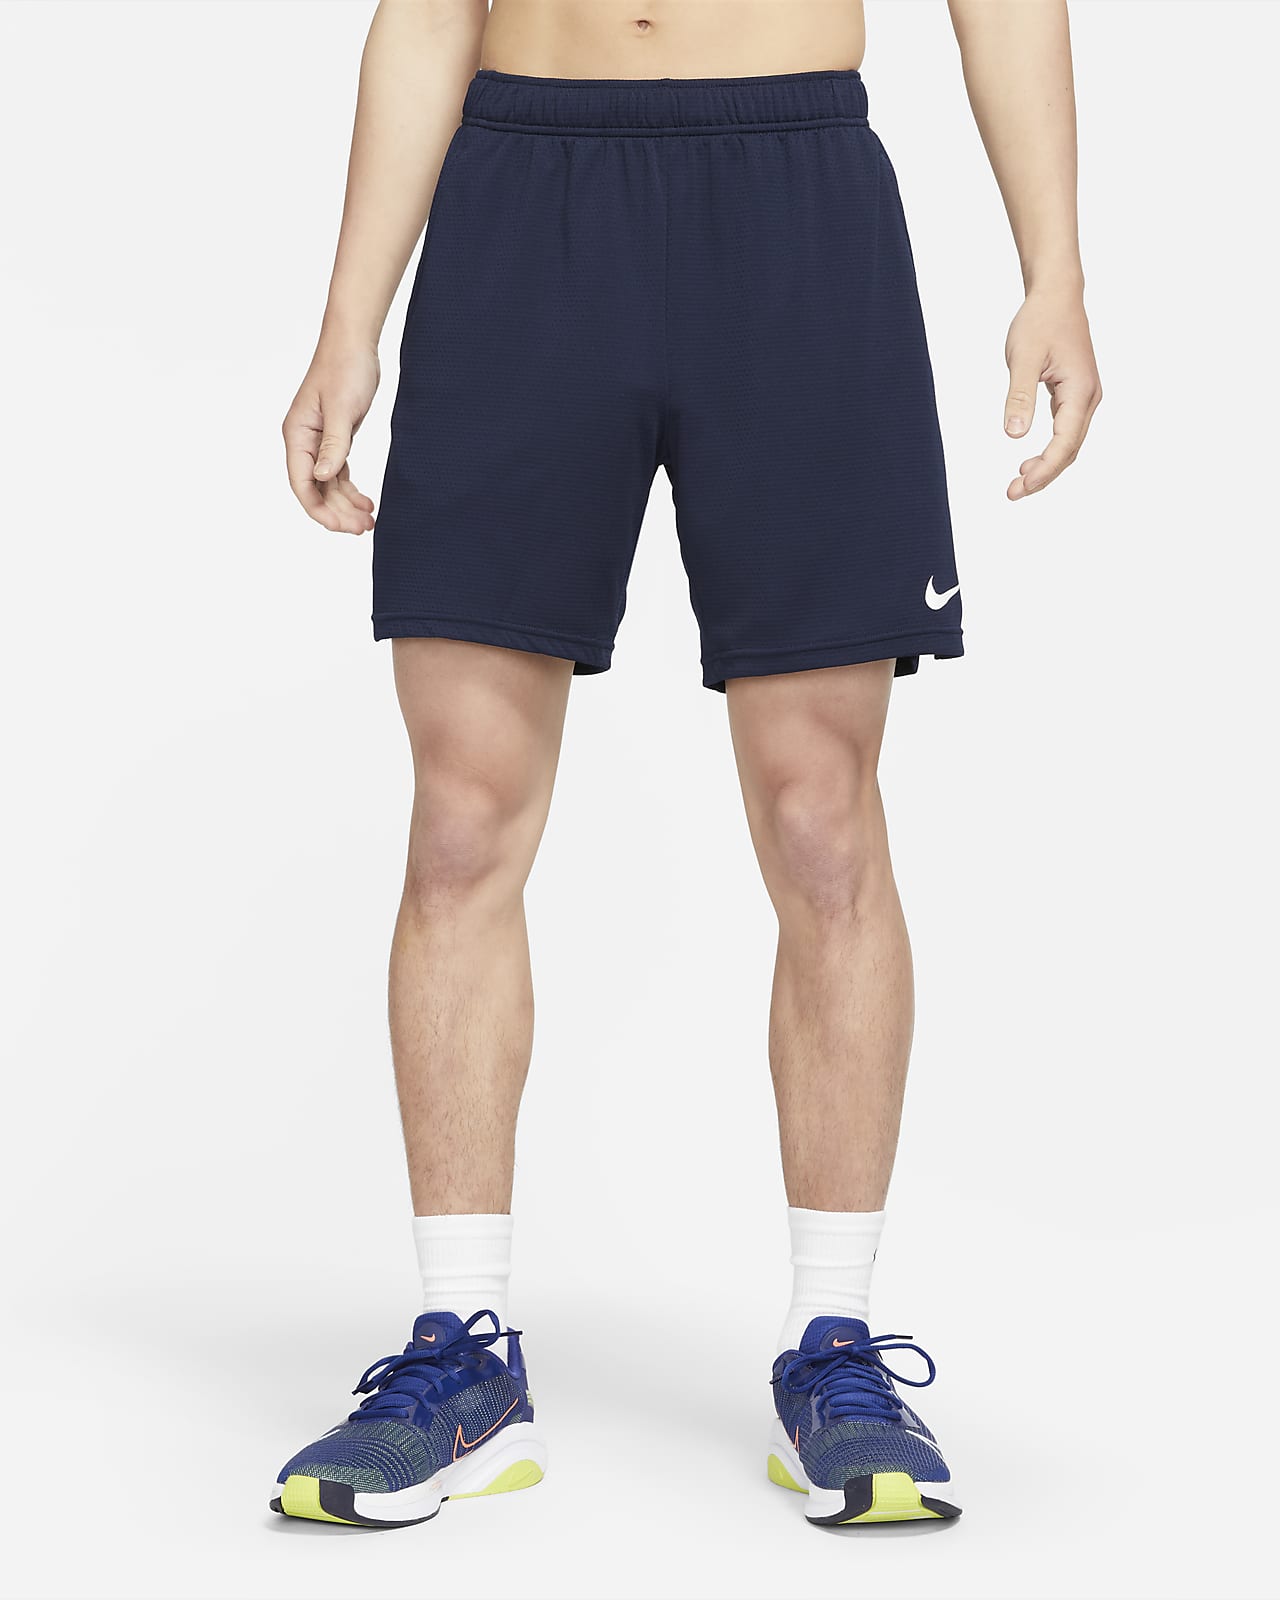 Nike Men's Mesh Training Shorts